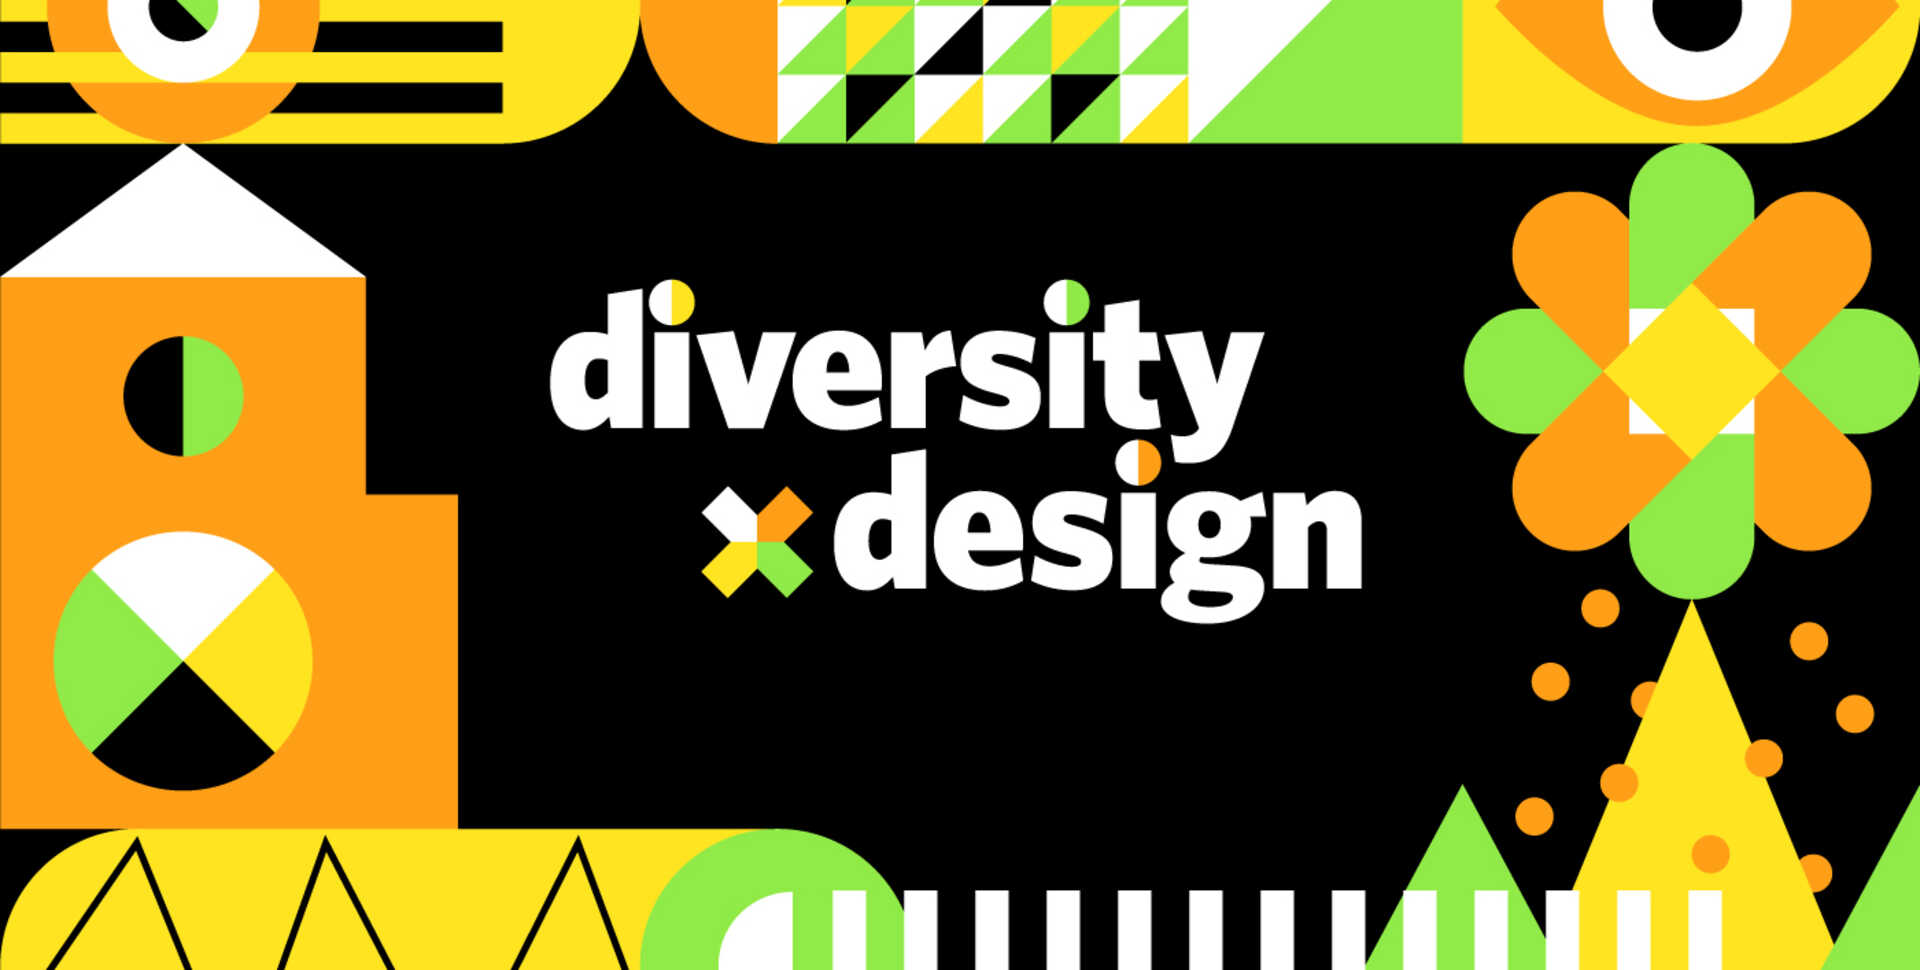 diversity x design